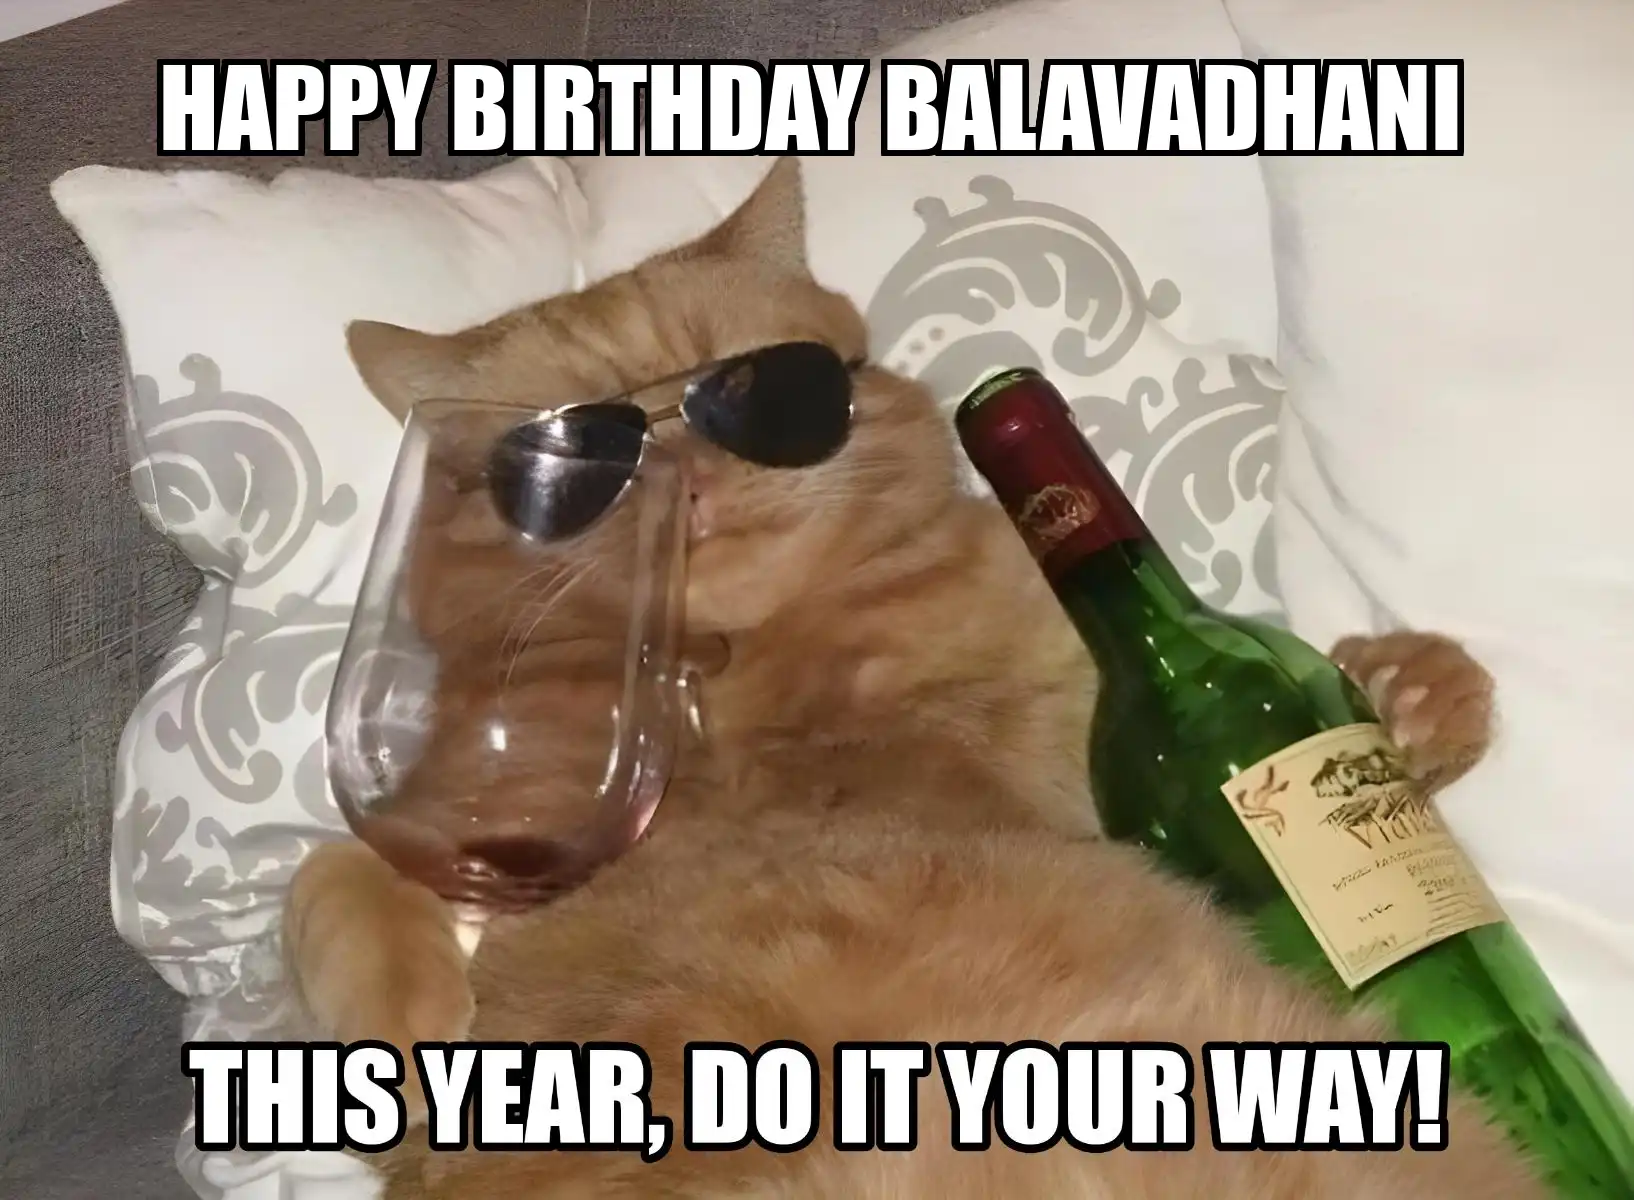 Happy Birthday Balavadhani This Year Do It Your Way Meme